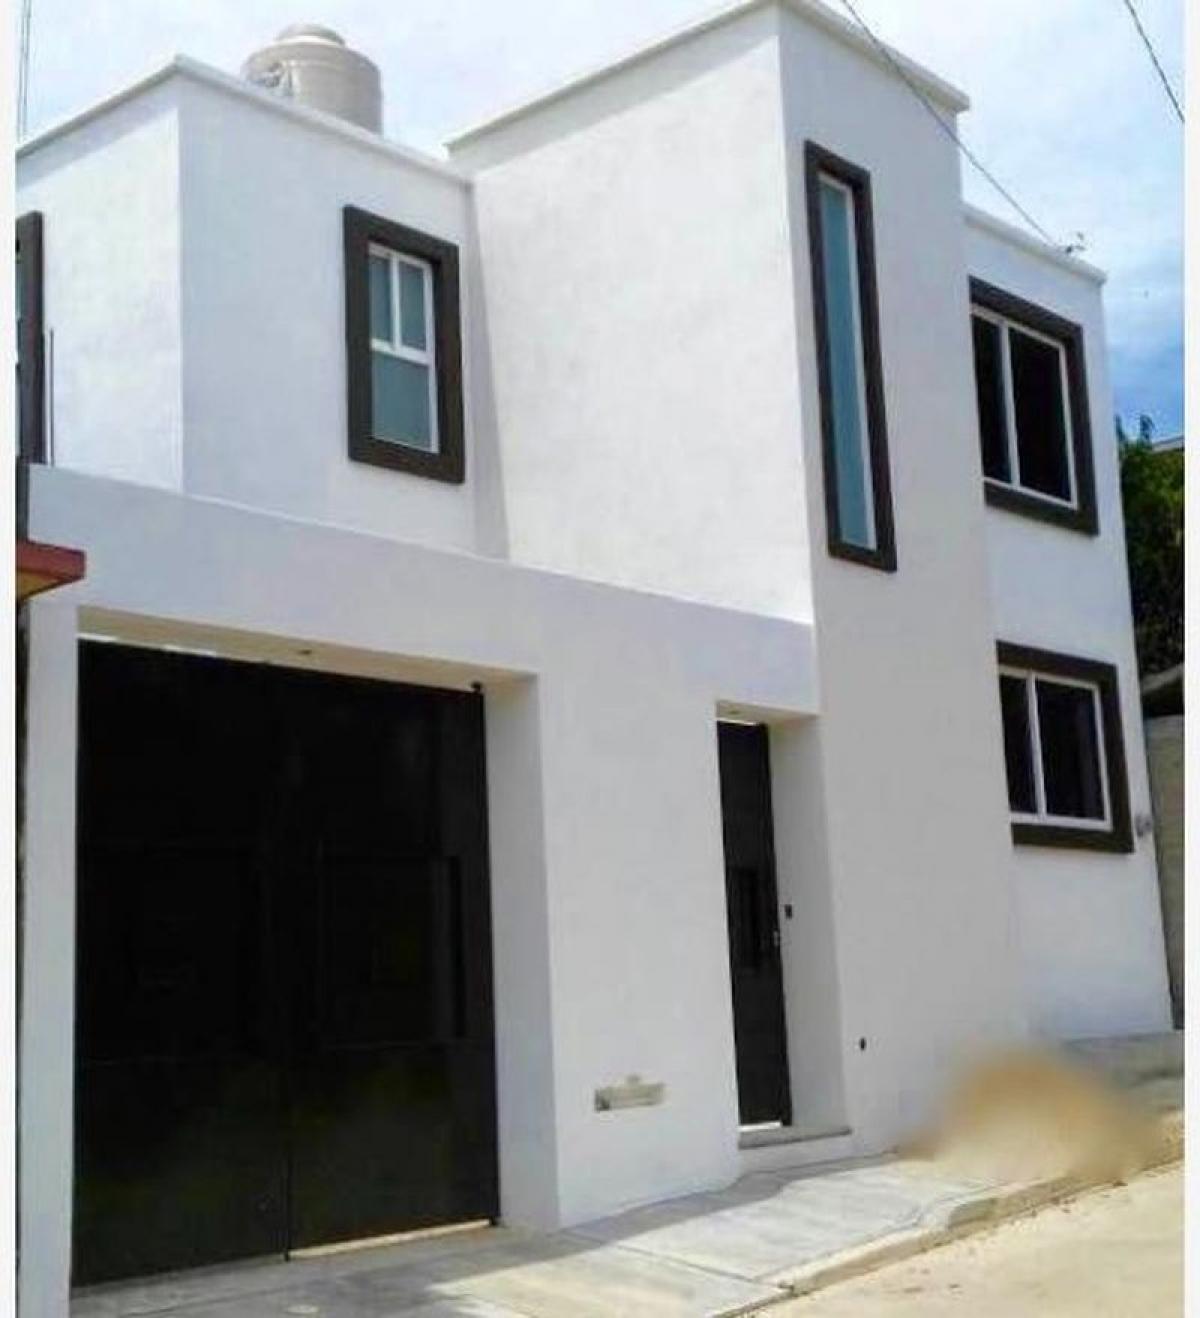 Picture of Home For Sale in Oaxaca De Juarez, Oaxaca, Mexico